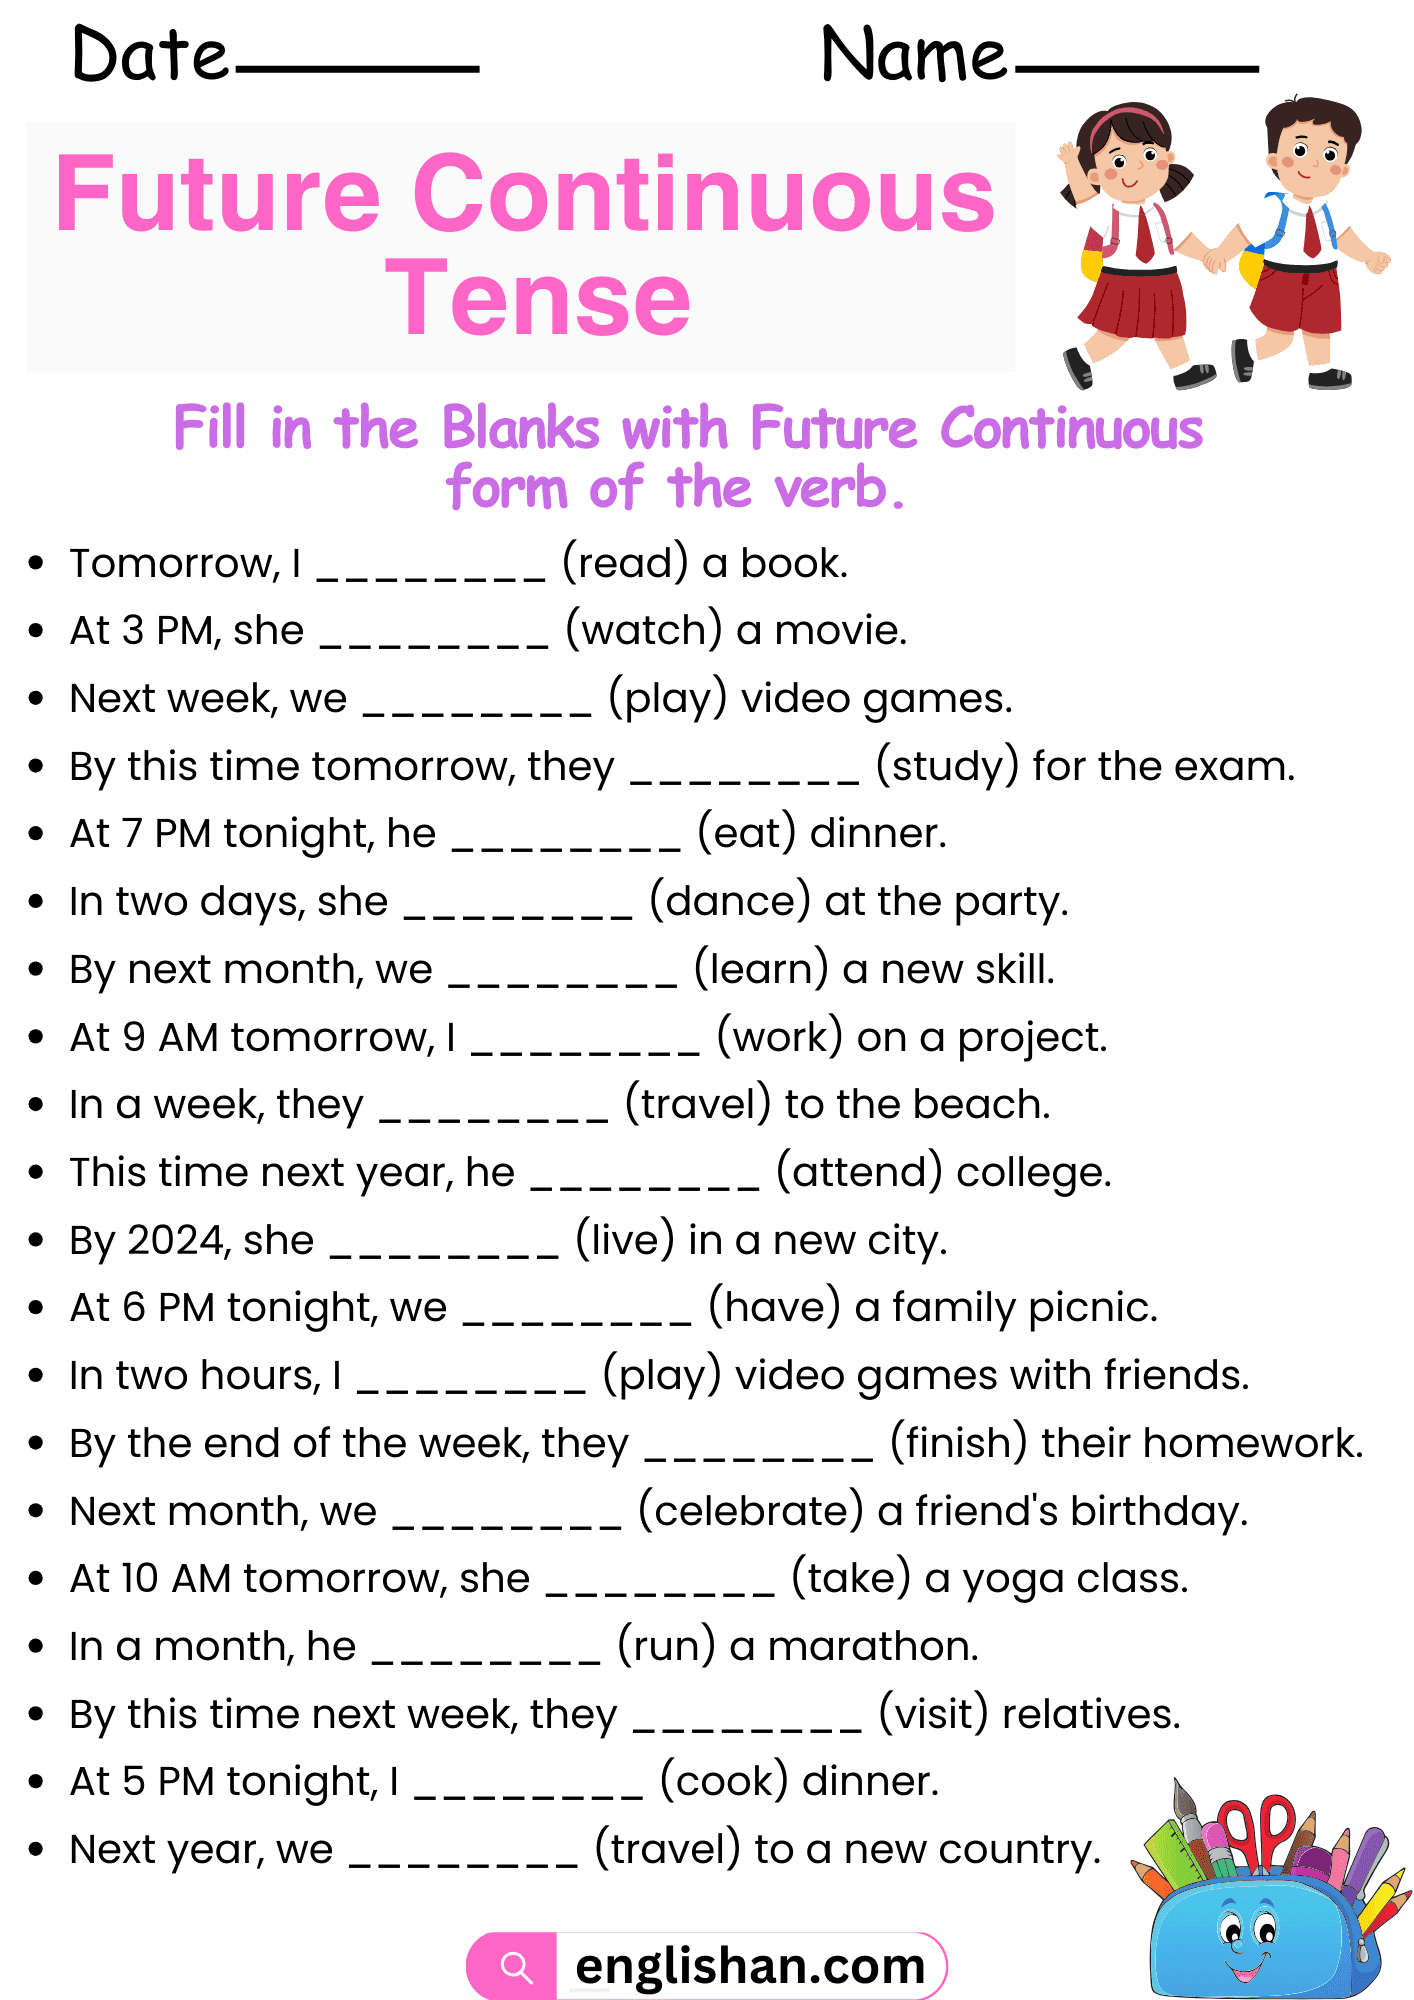 25 Sentences using Future Continuous Tense Worksheet. 25 Fill in the blanks with Future Continuous Tense Worksheet.